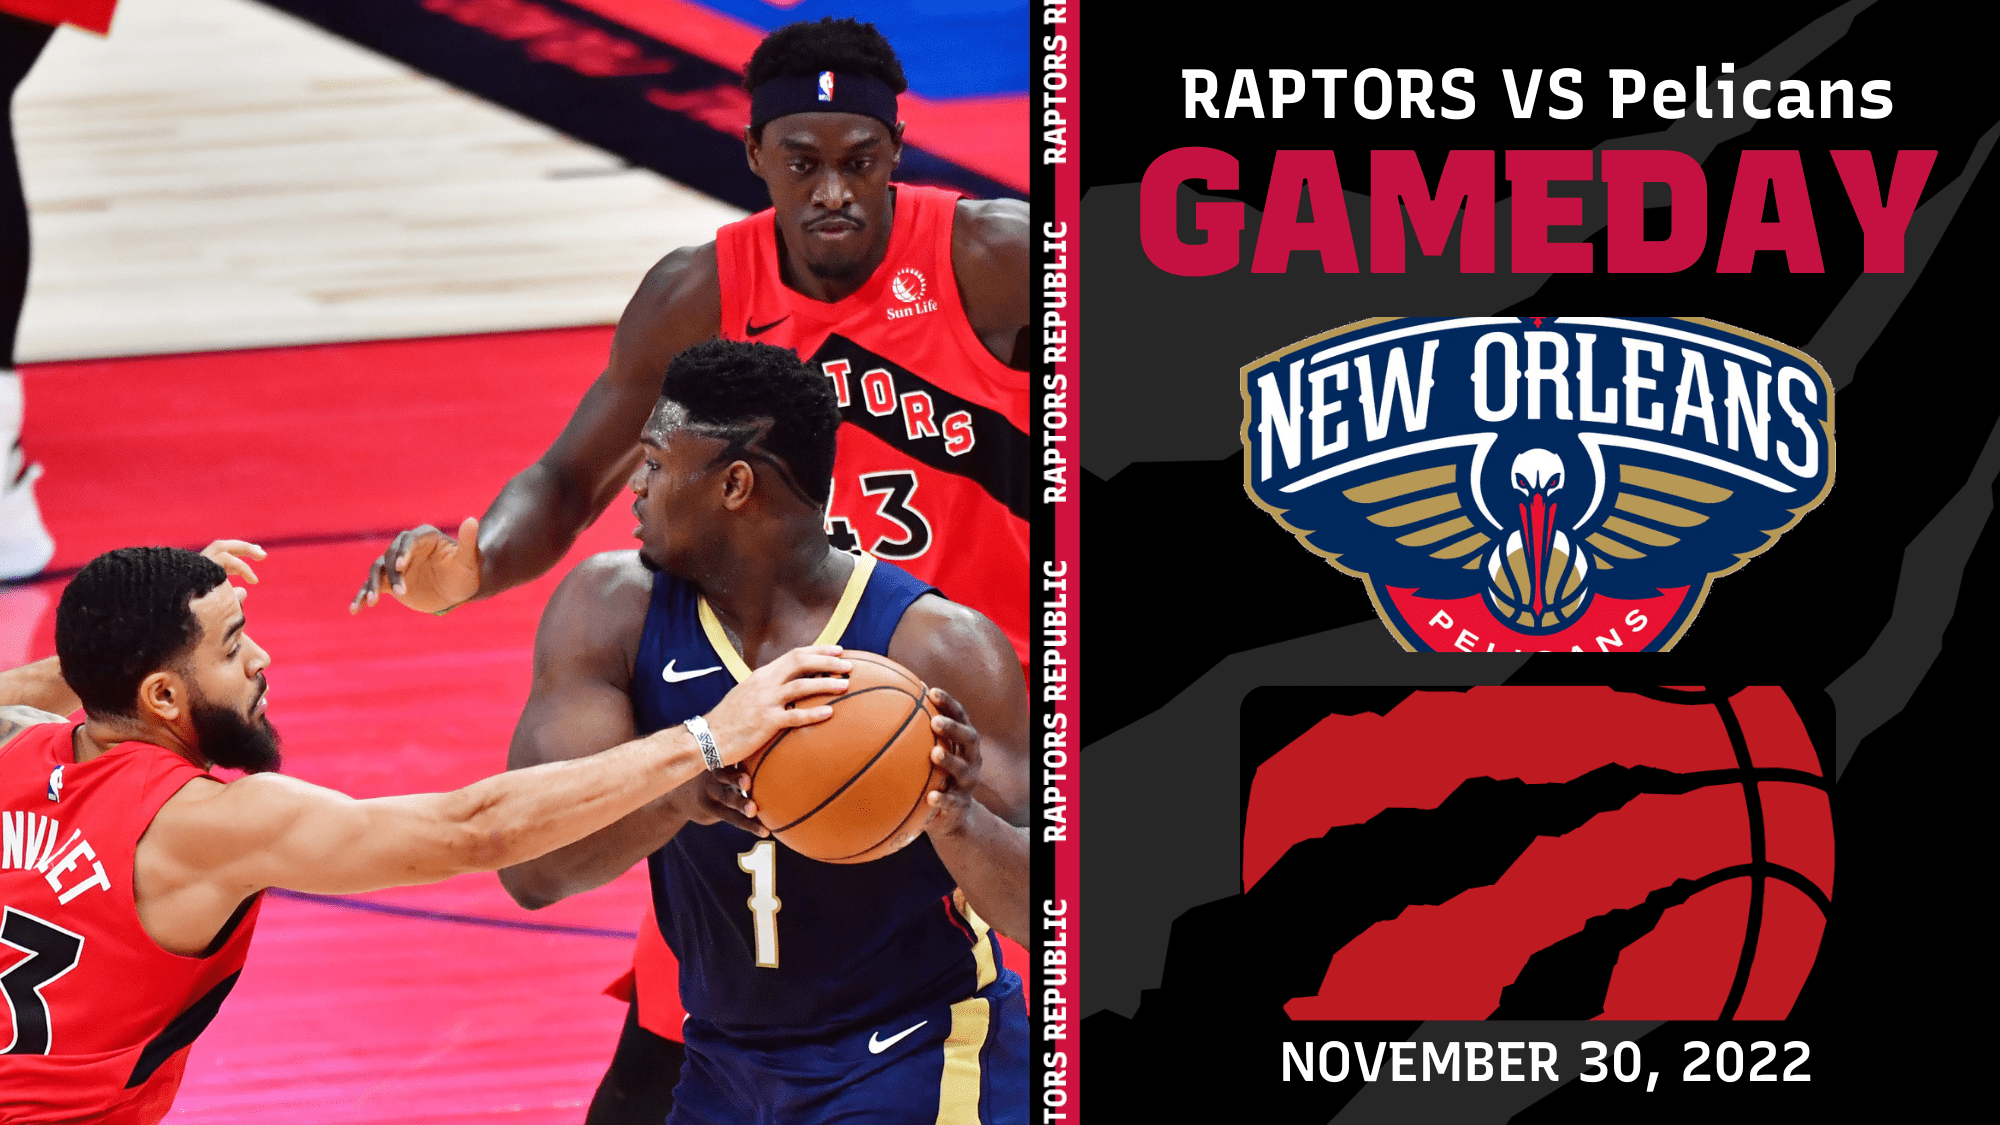 Gameday: Raptors @ Pelicans, Nov 30